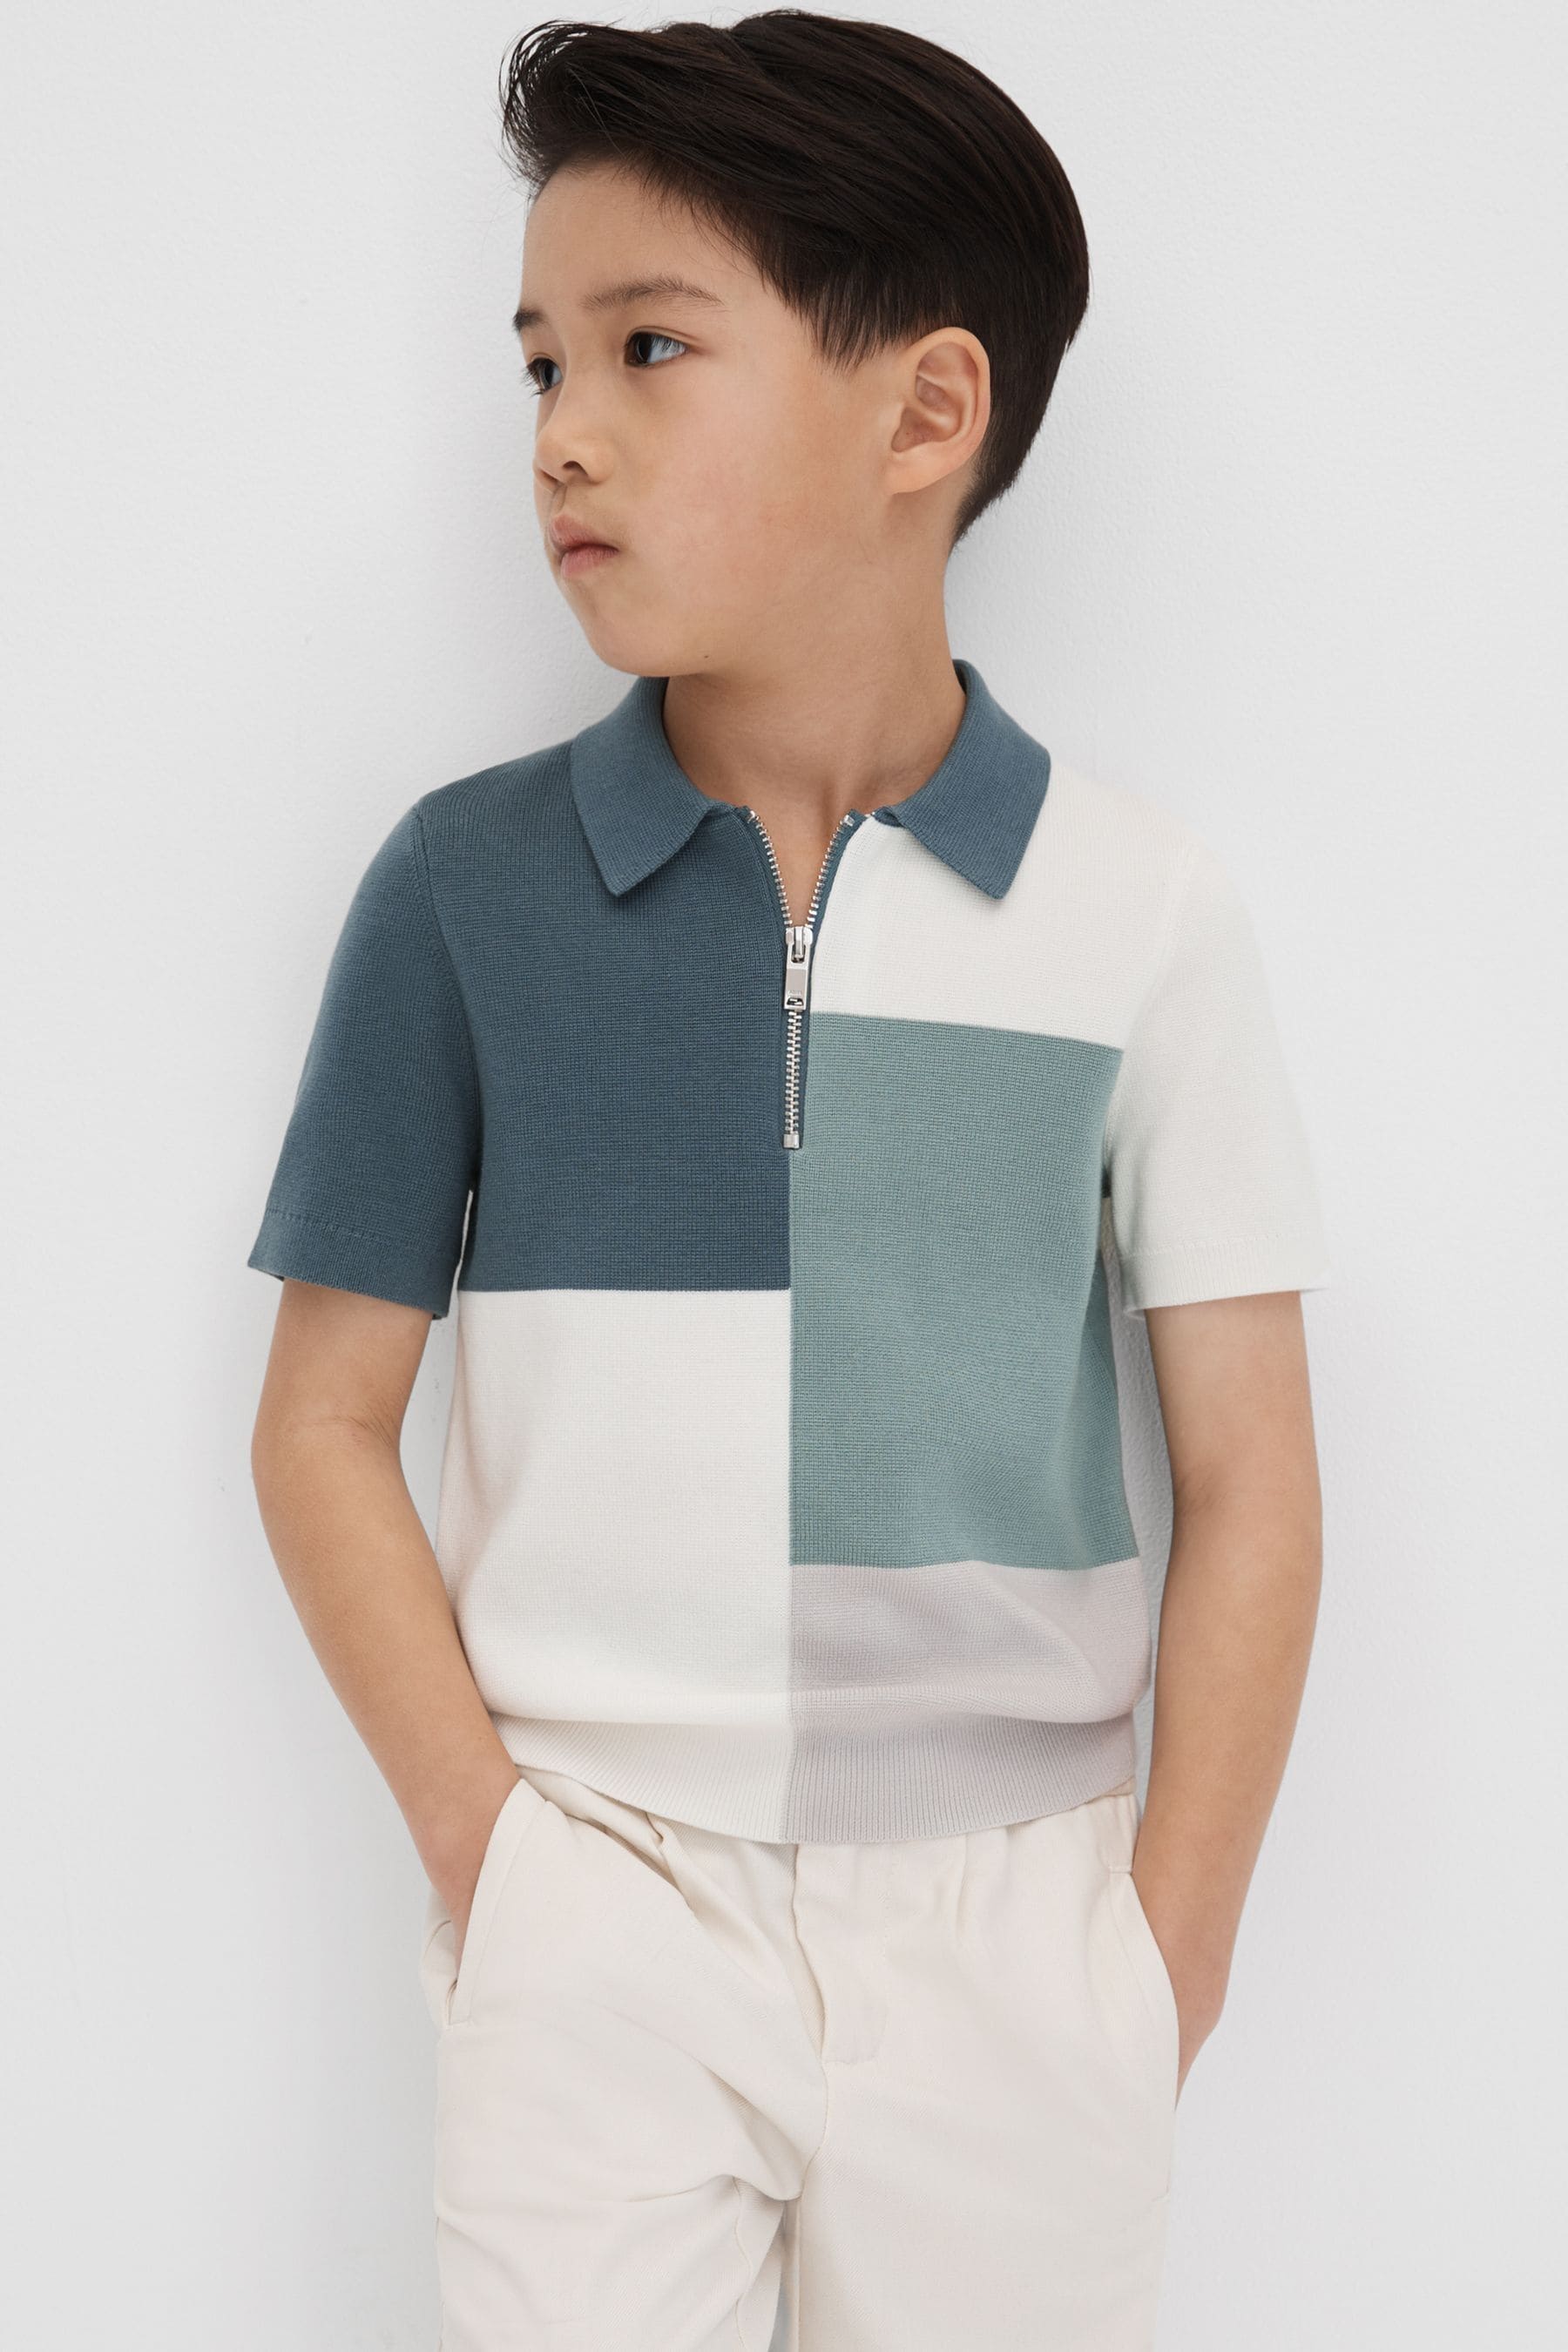 Reiss Kids' Delta - Sage Junior Colourblock Half-zip Polo Shirt, Uk 7-8 Yrs